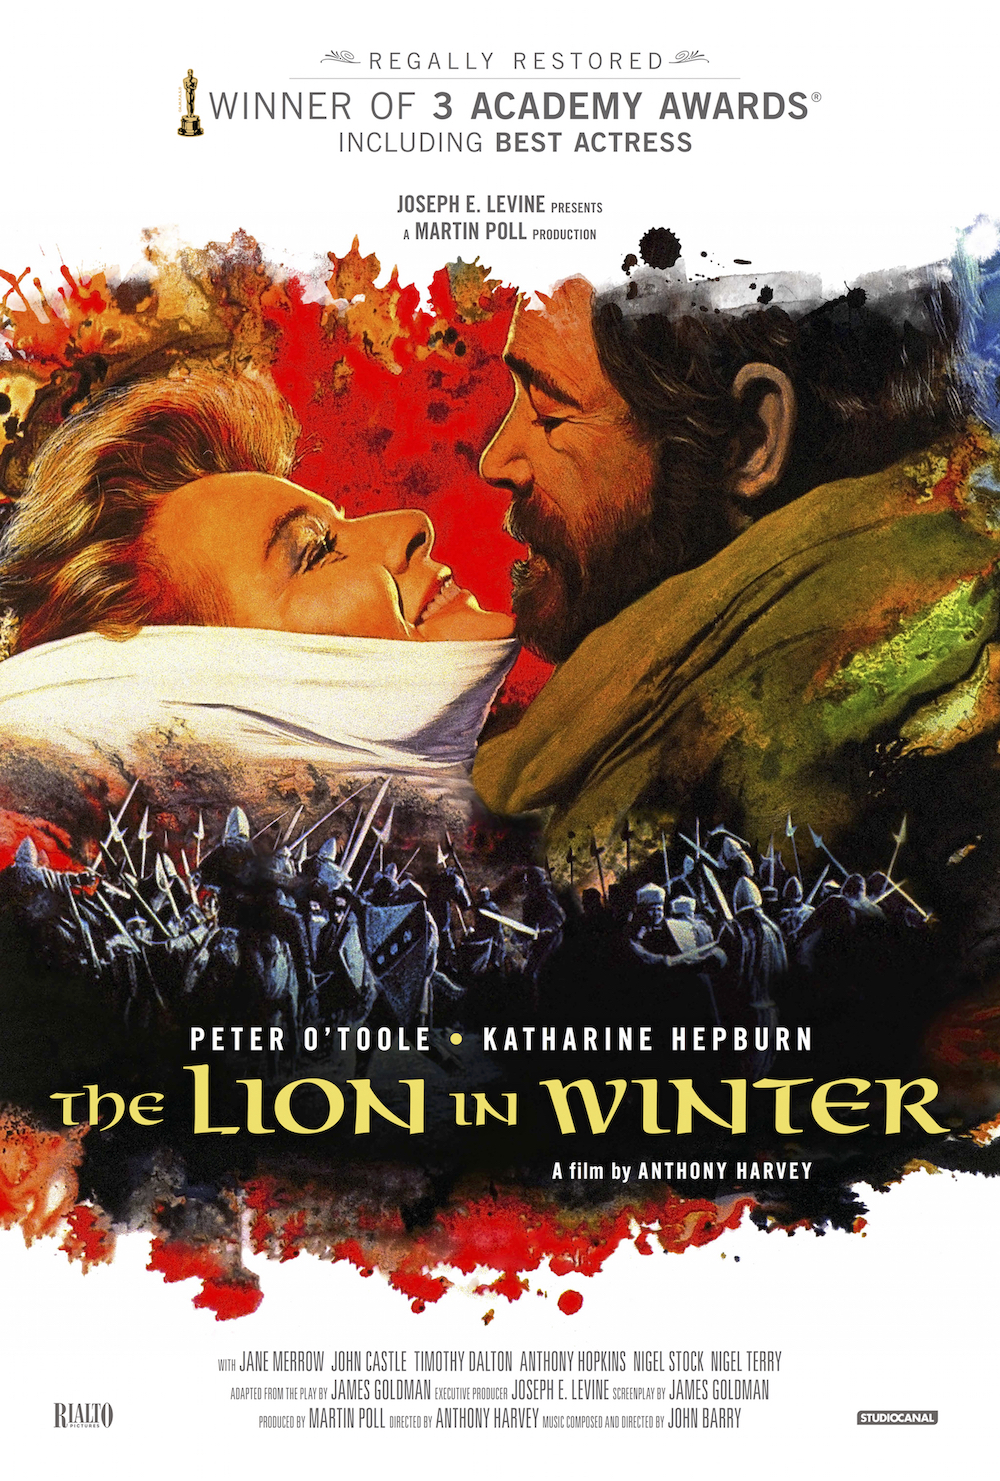 Nonton film The Lion in Winter layarkaca21 indoxx1 ganool online streaming terbaru